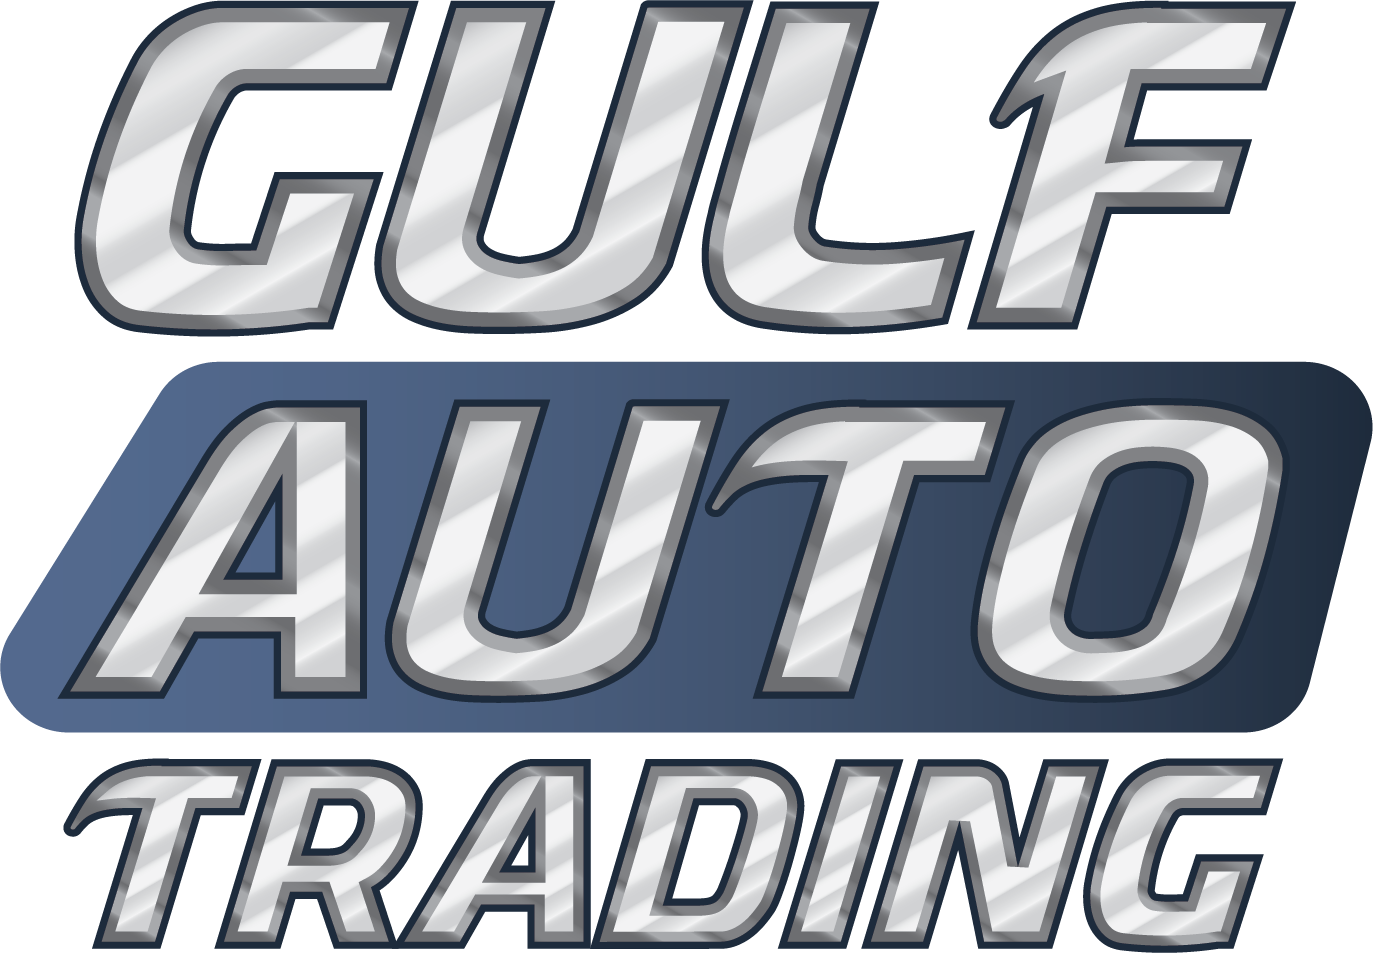 Gulf Auto Trading